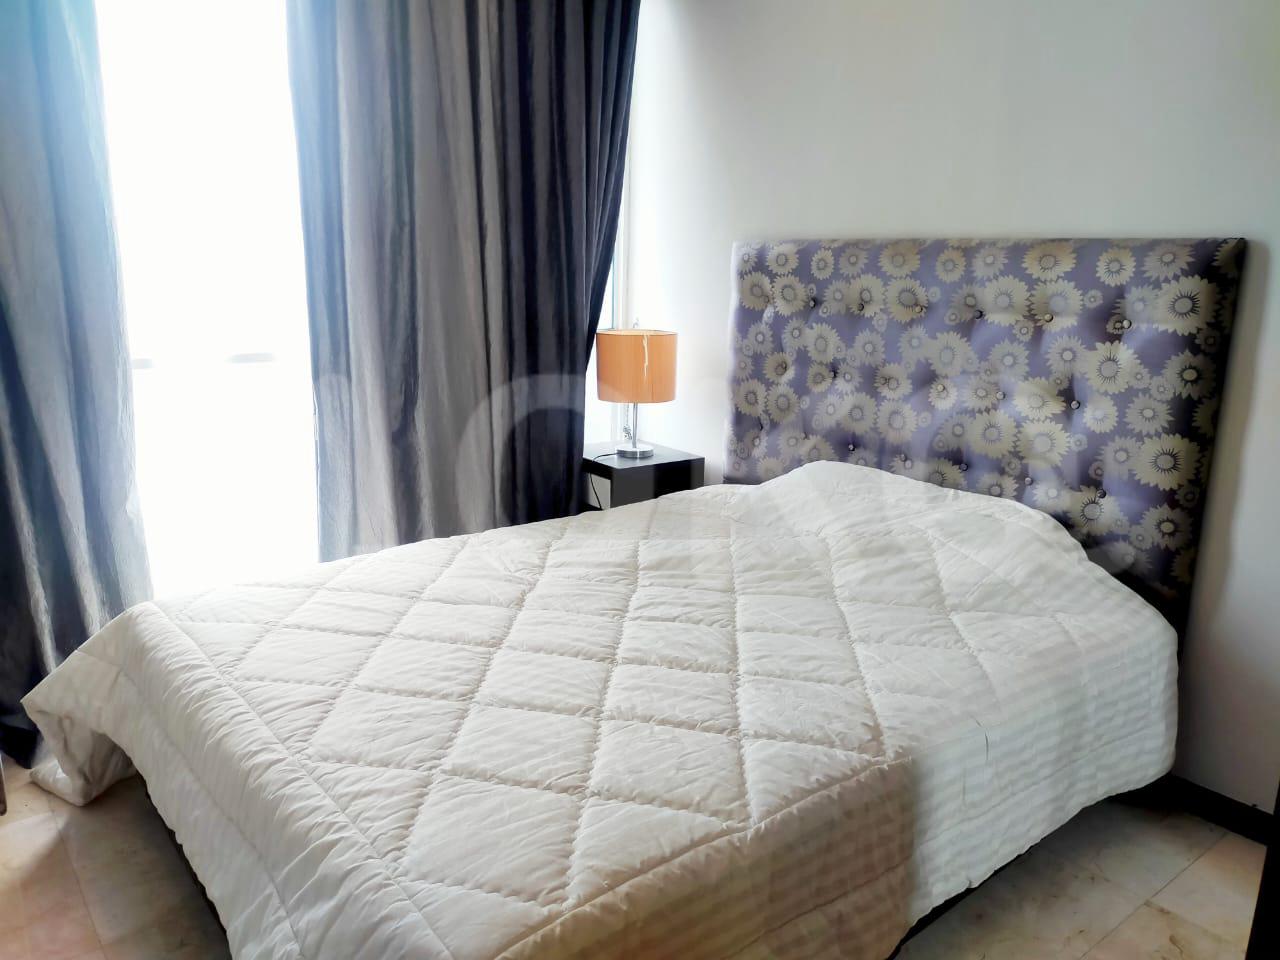 Sewa Apartemen Bellagio Residence Tipe 4 Kamar Tidur di Lantai 35 fku2e7